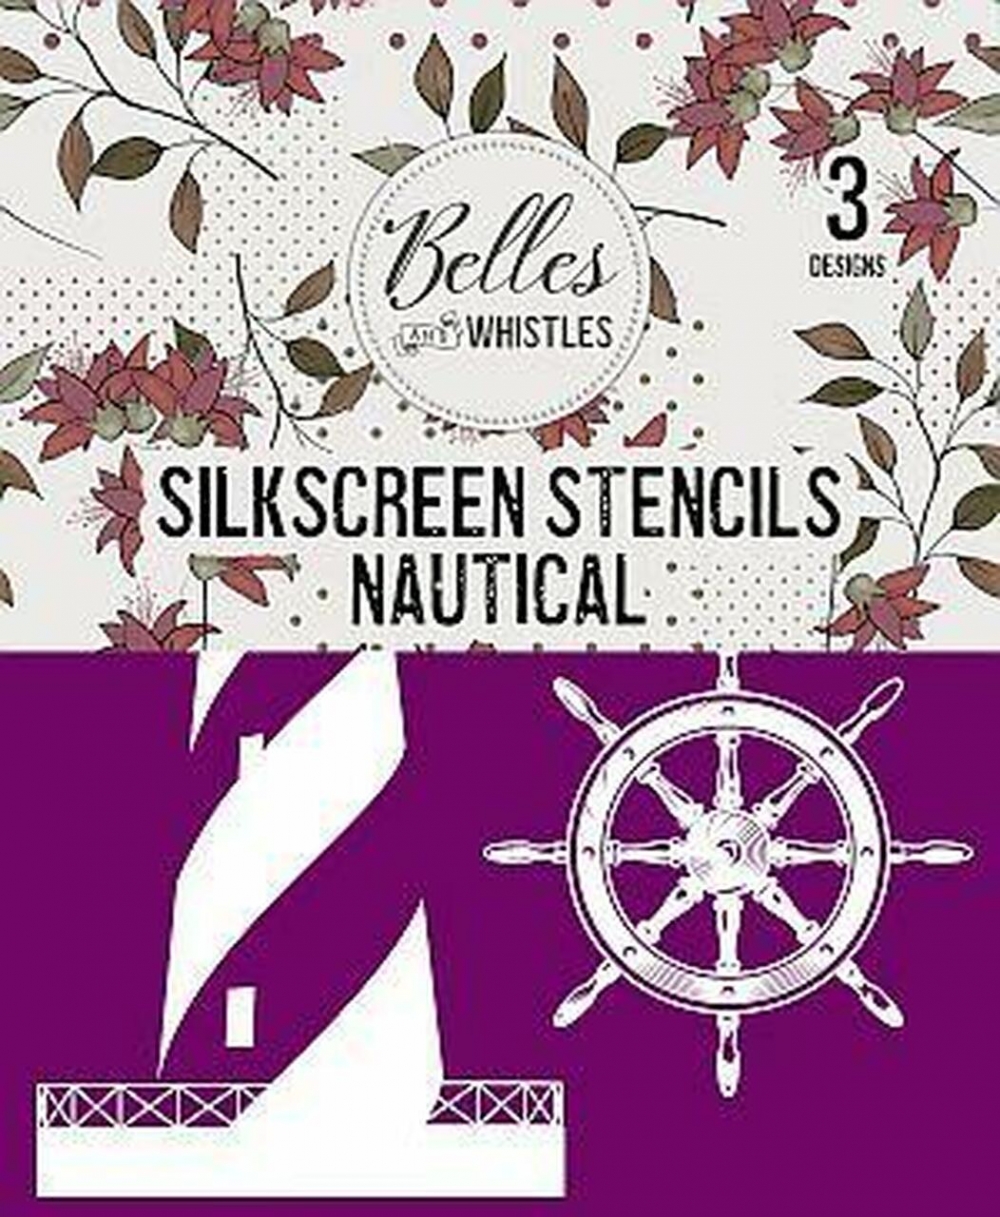 Belles and Whistles Silkscreen Stencil – Lightweight Adhesive – Reusable – Nautical 20x25cm